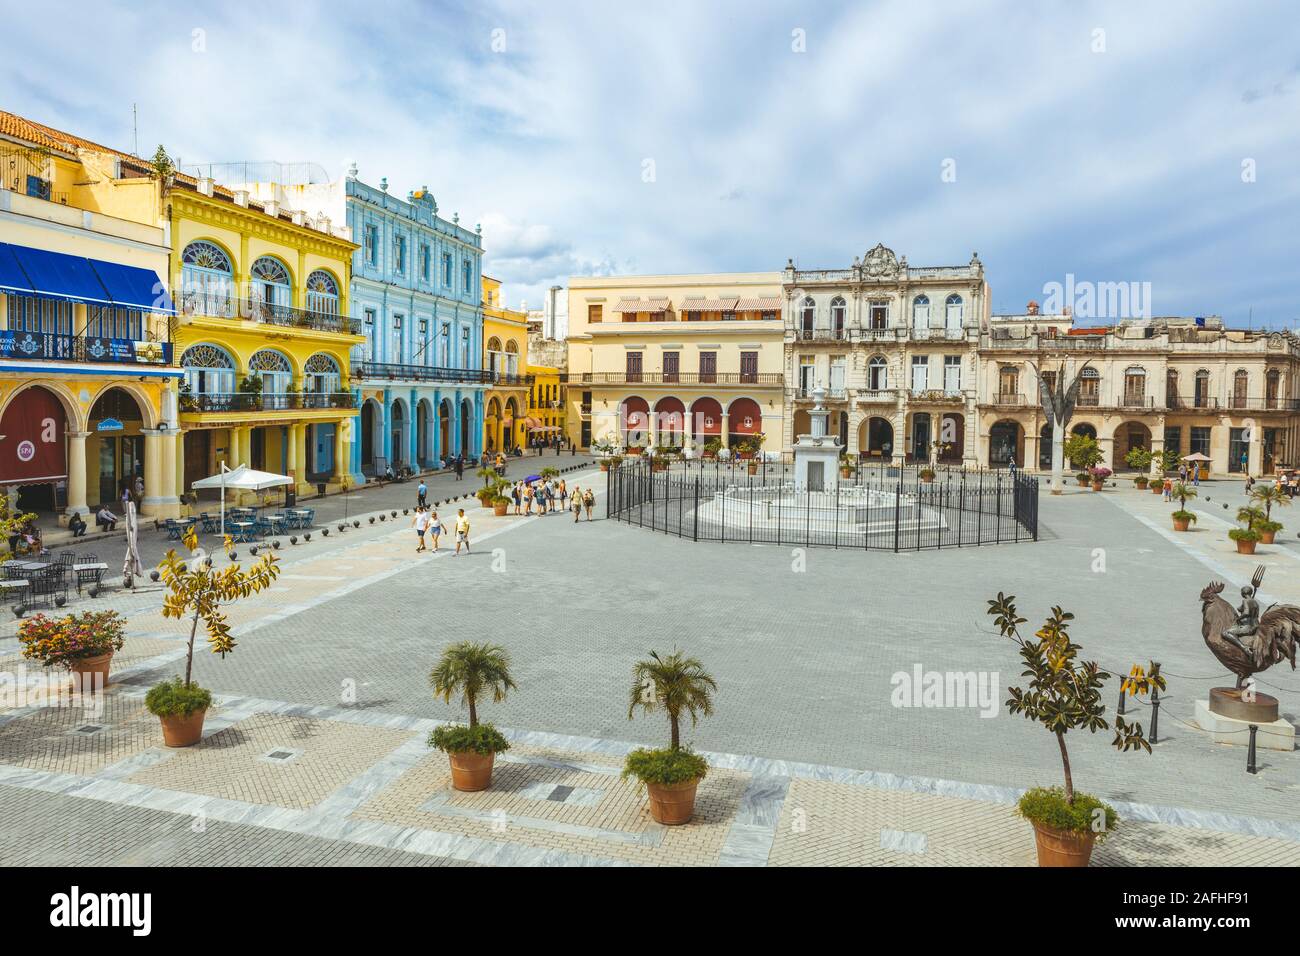 Havanna, Kuba - Oktober 18, 2019: Der berühmte historische Ort Plaza Vieja in der Altstadt von Havanna Kuba Stockfoto